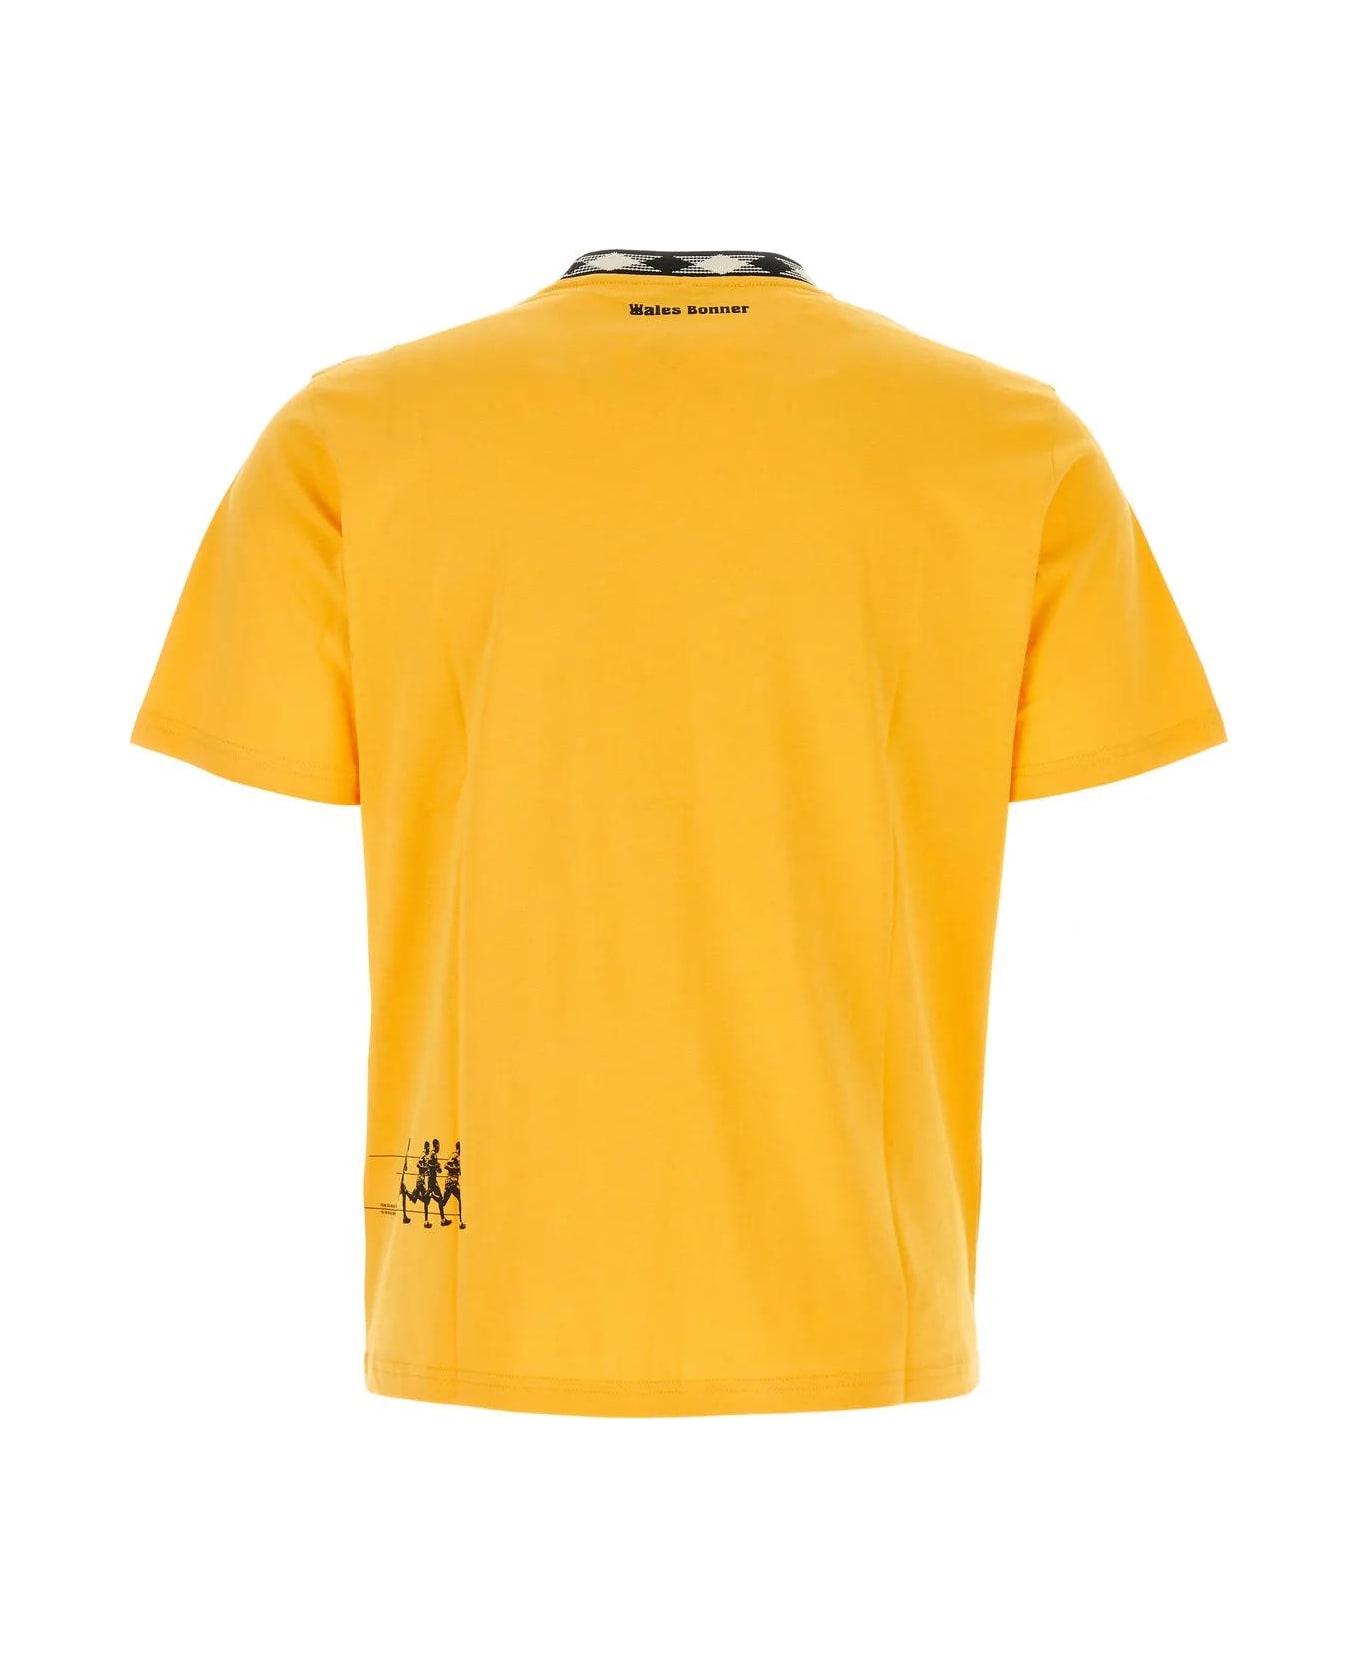 Wales Bonner Yellow Cotton Endurance T-shirt - Giallo